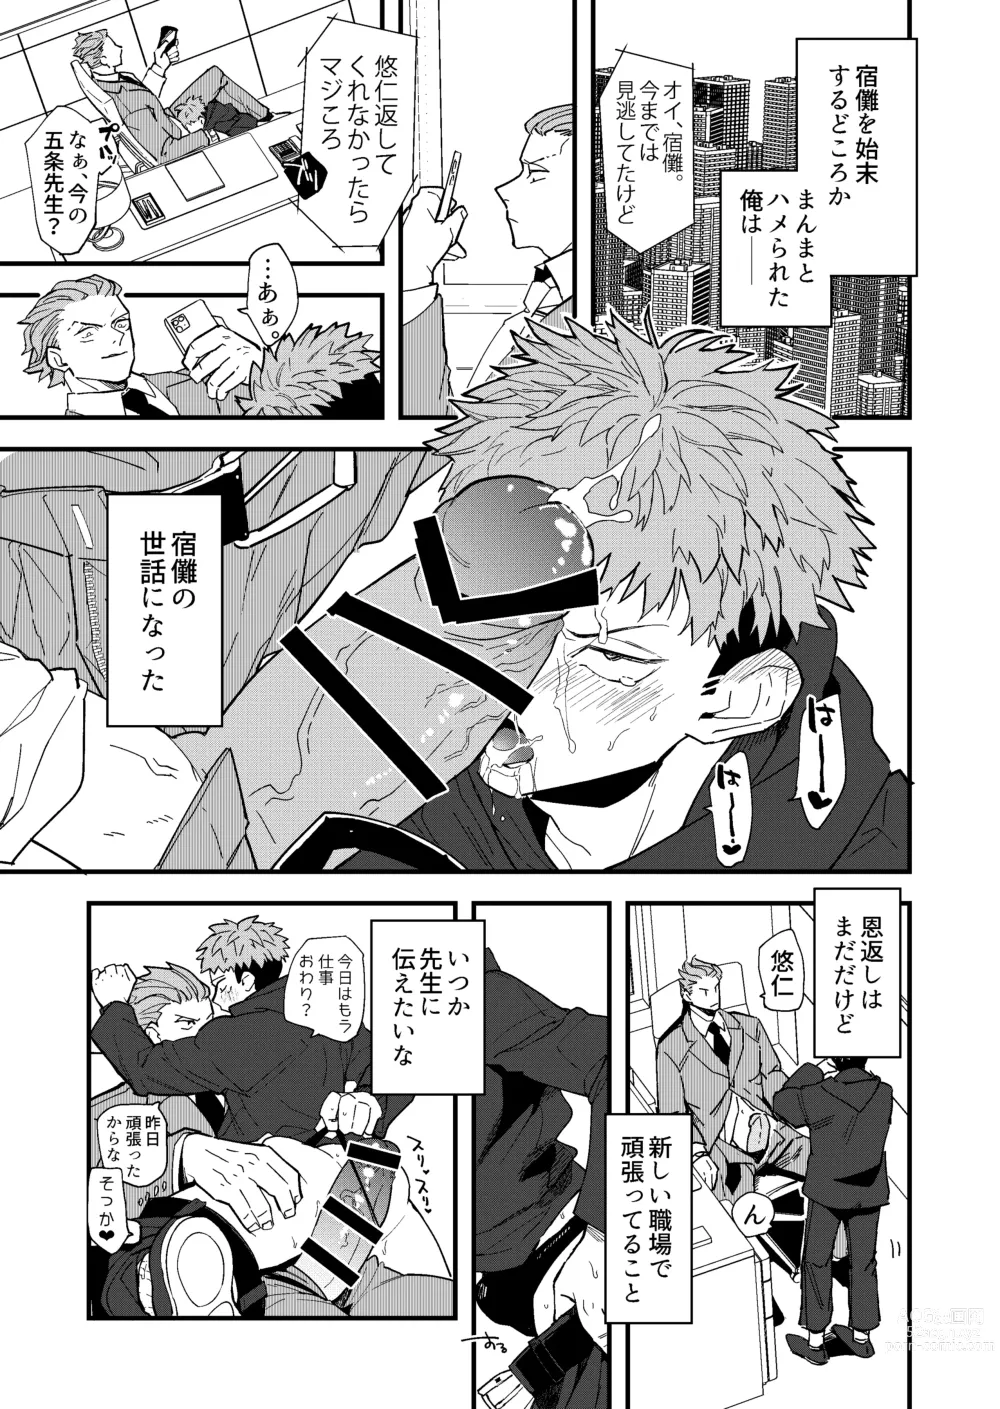 Page 20 of doujinshi Kanzen haiboku